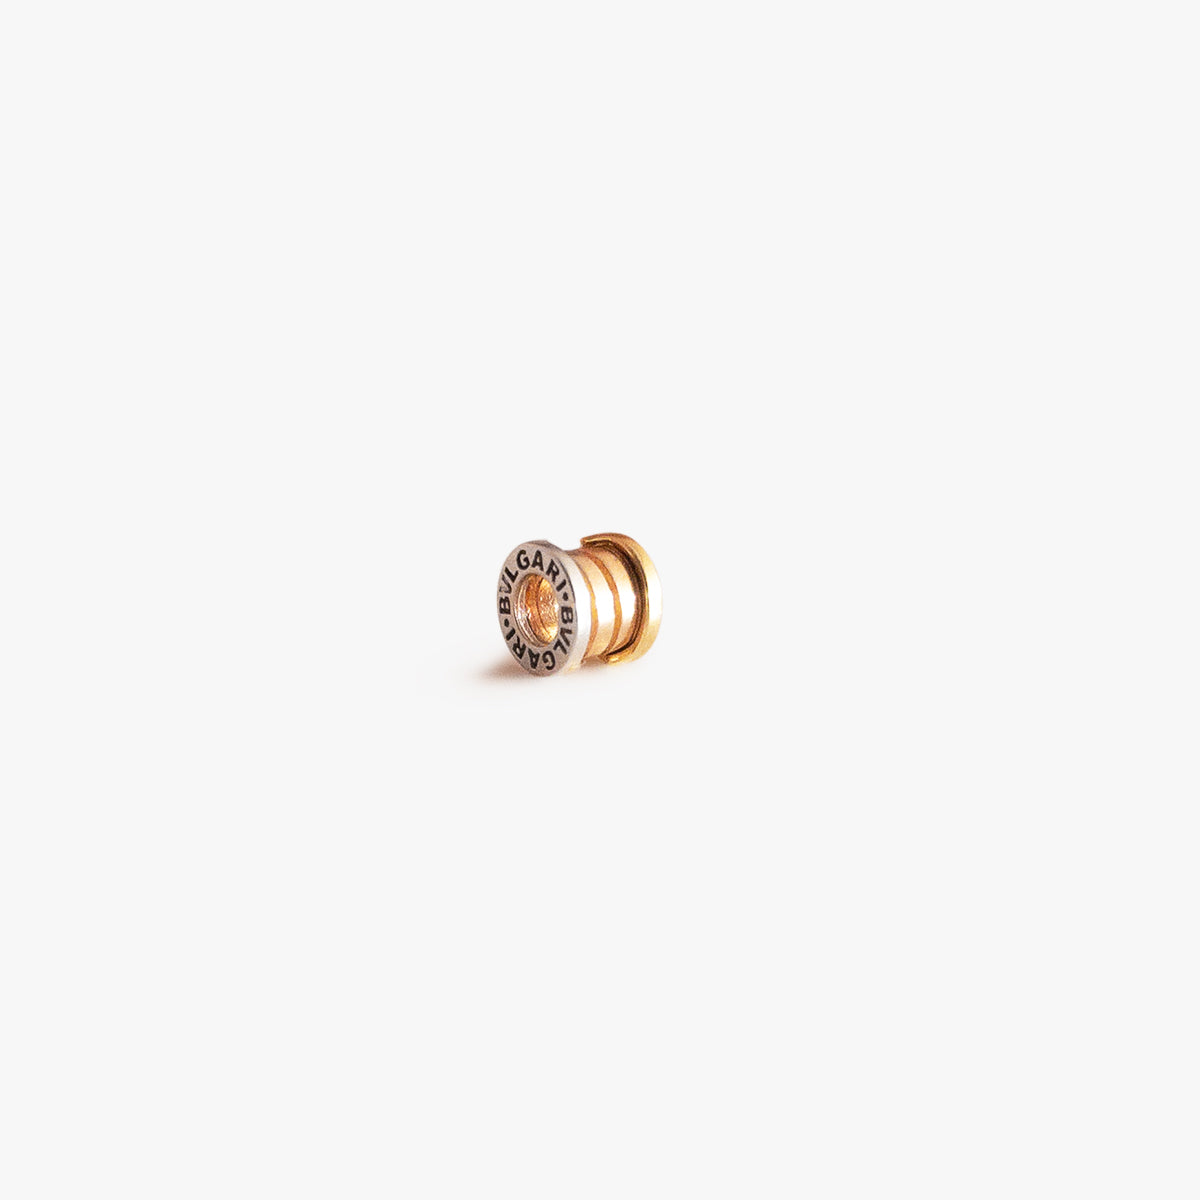 The Mini Barrel Designer Charm in Solid Gold